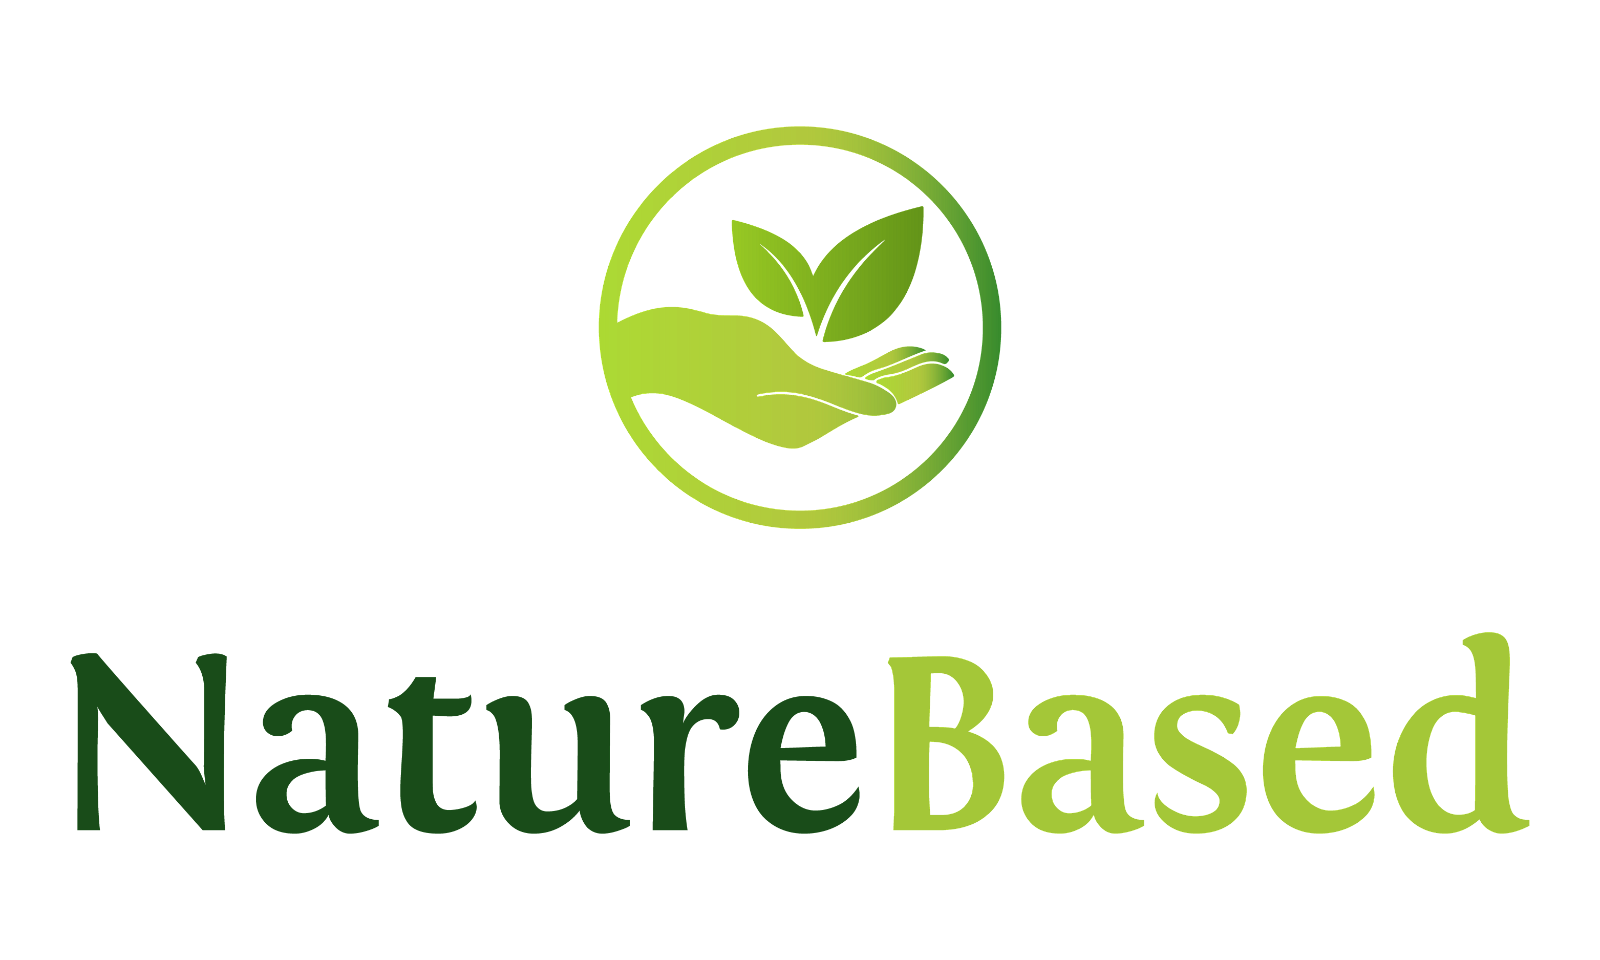 NatureBased.co - Creative brandable domain for sale